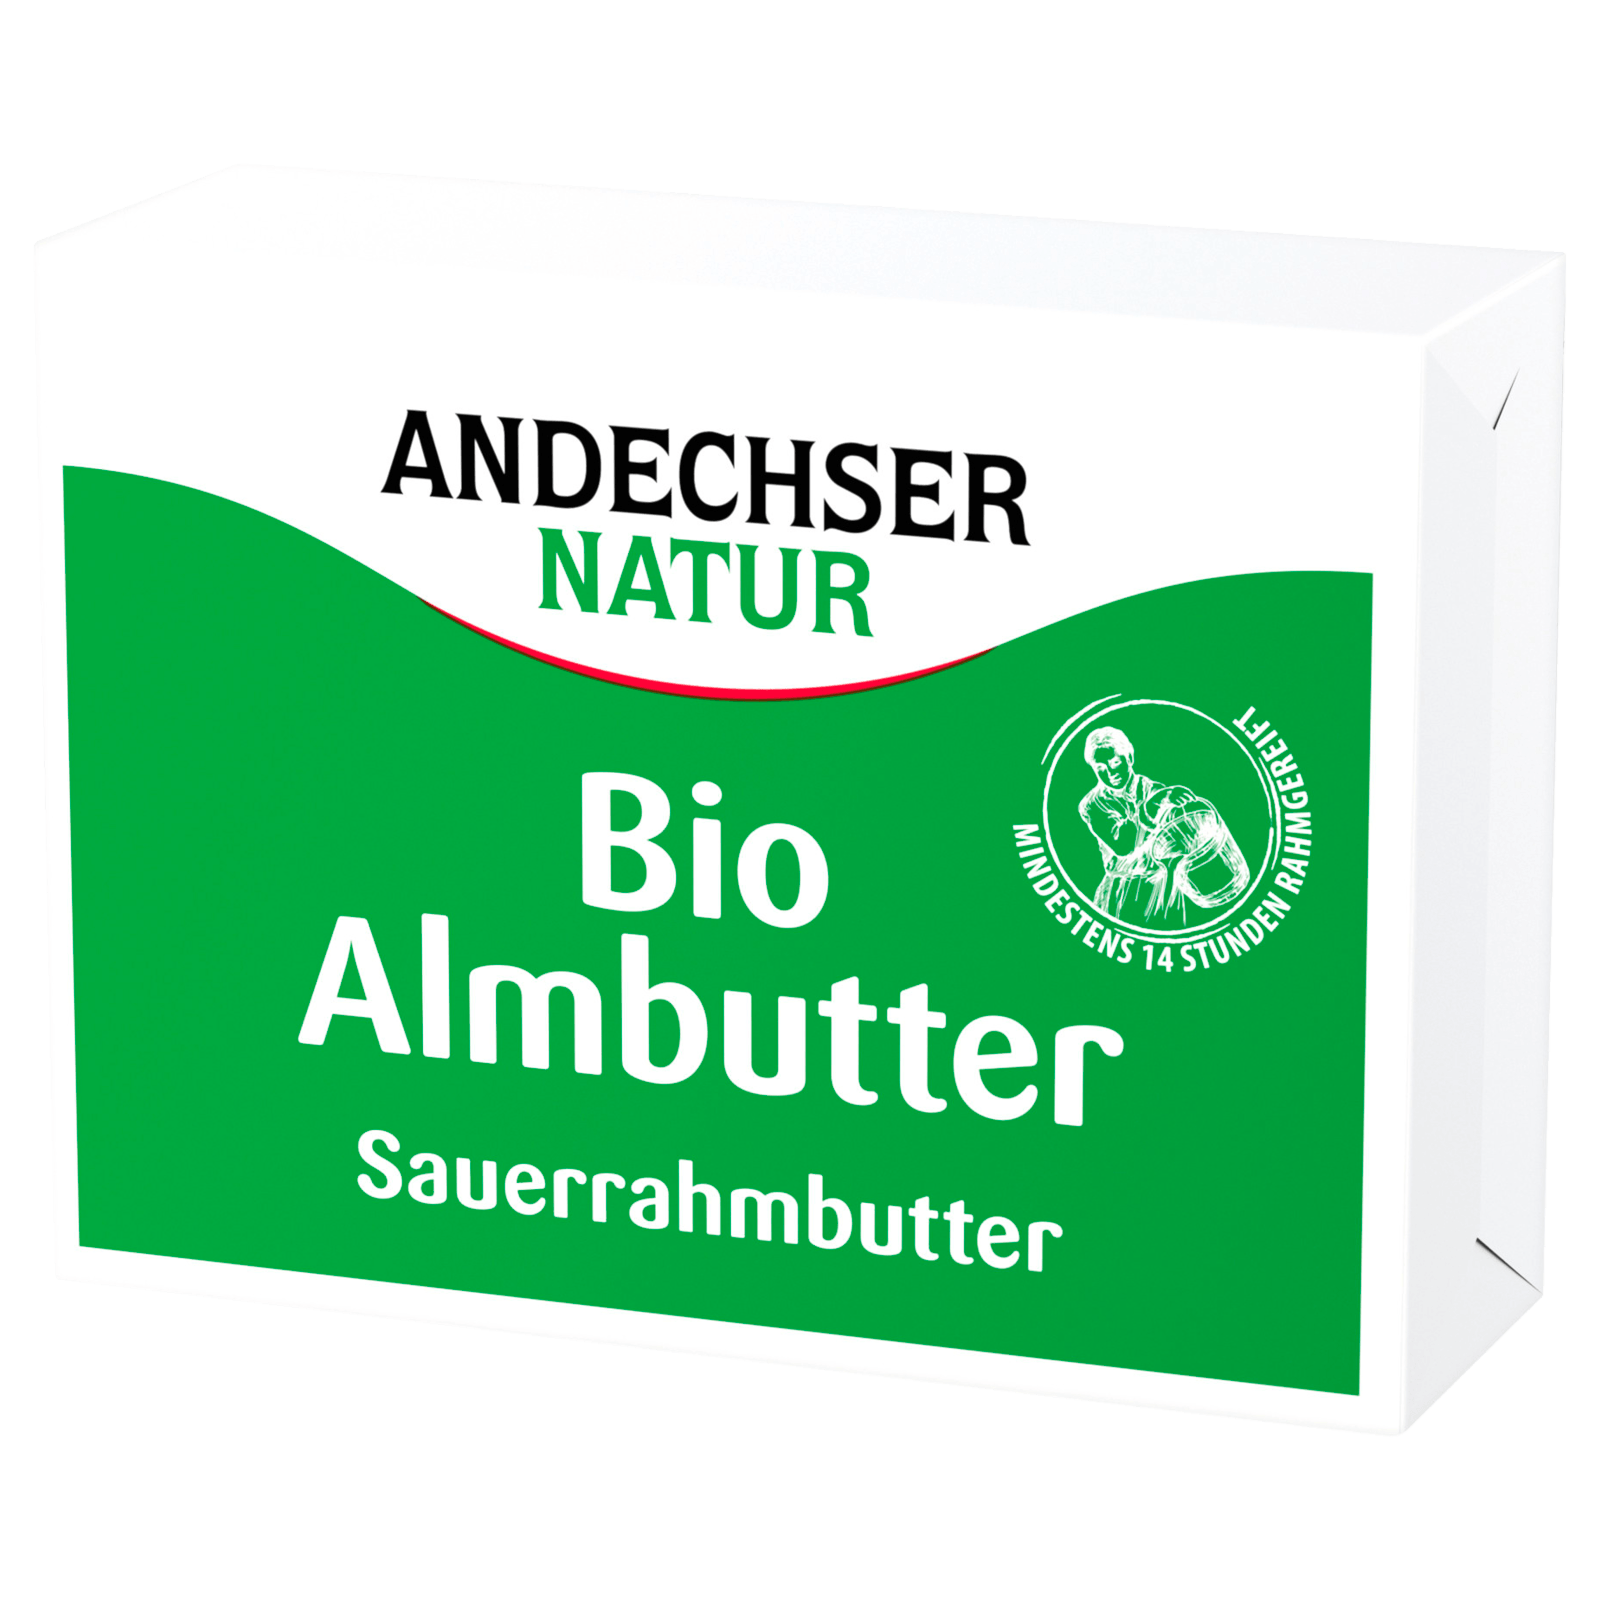 Andechser Natur Bio-Almbutter 250g